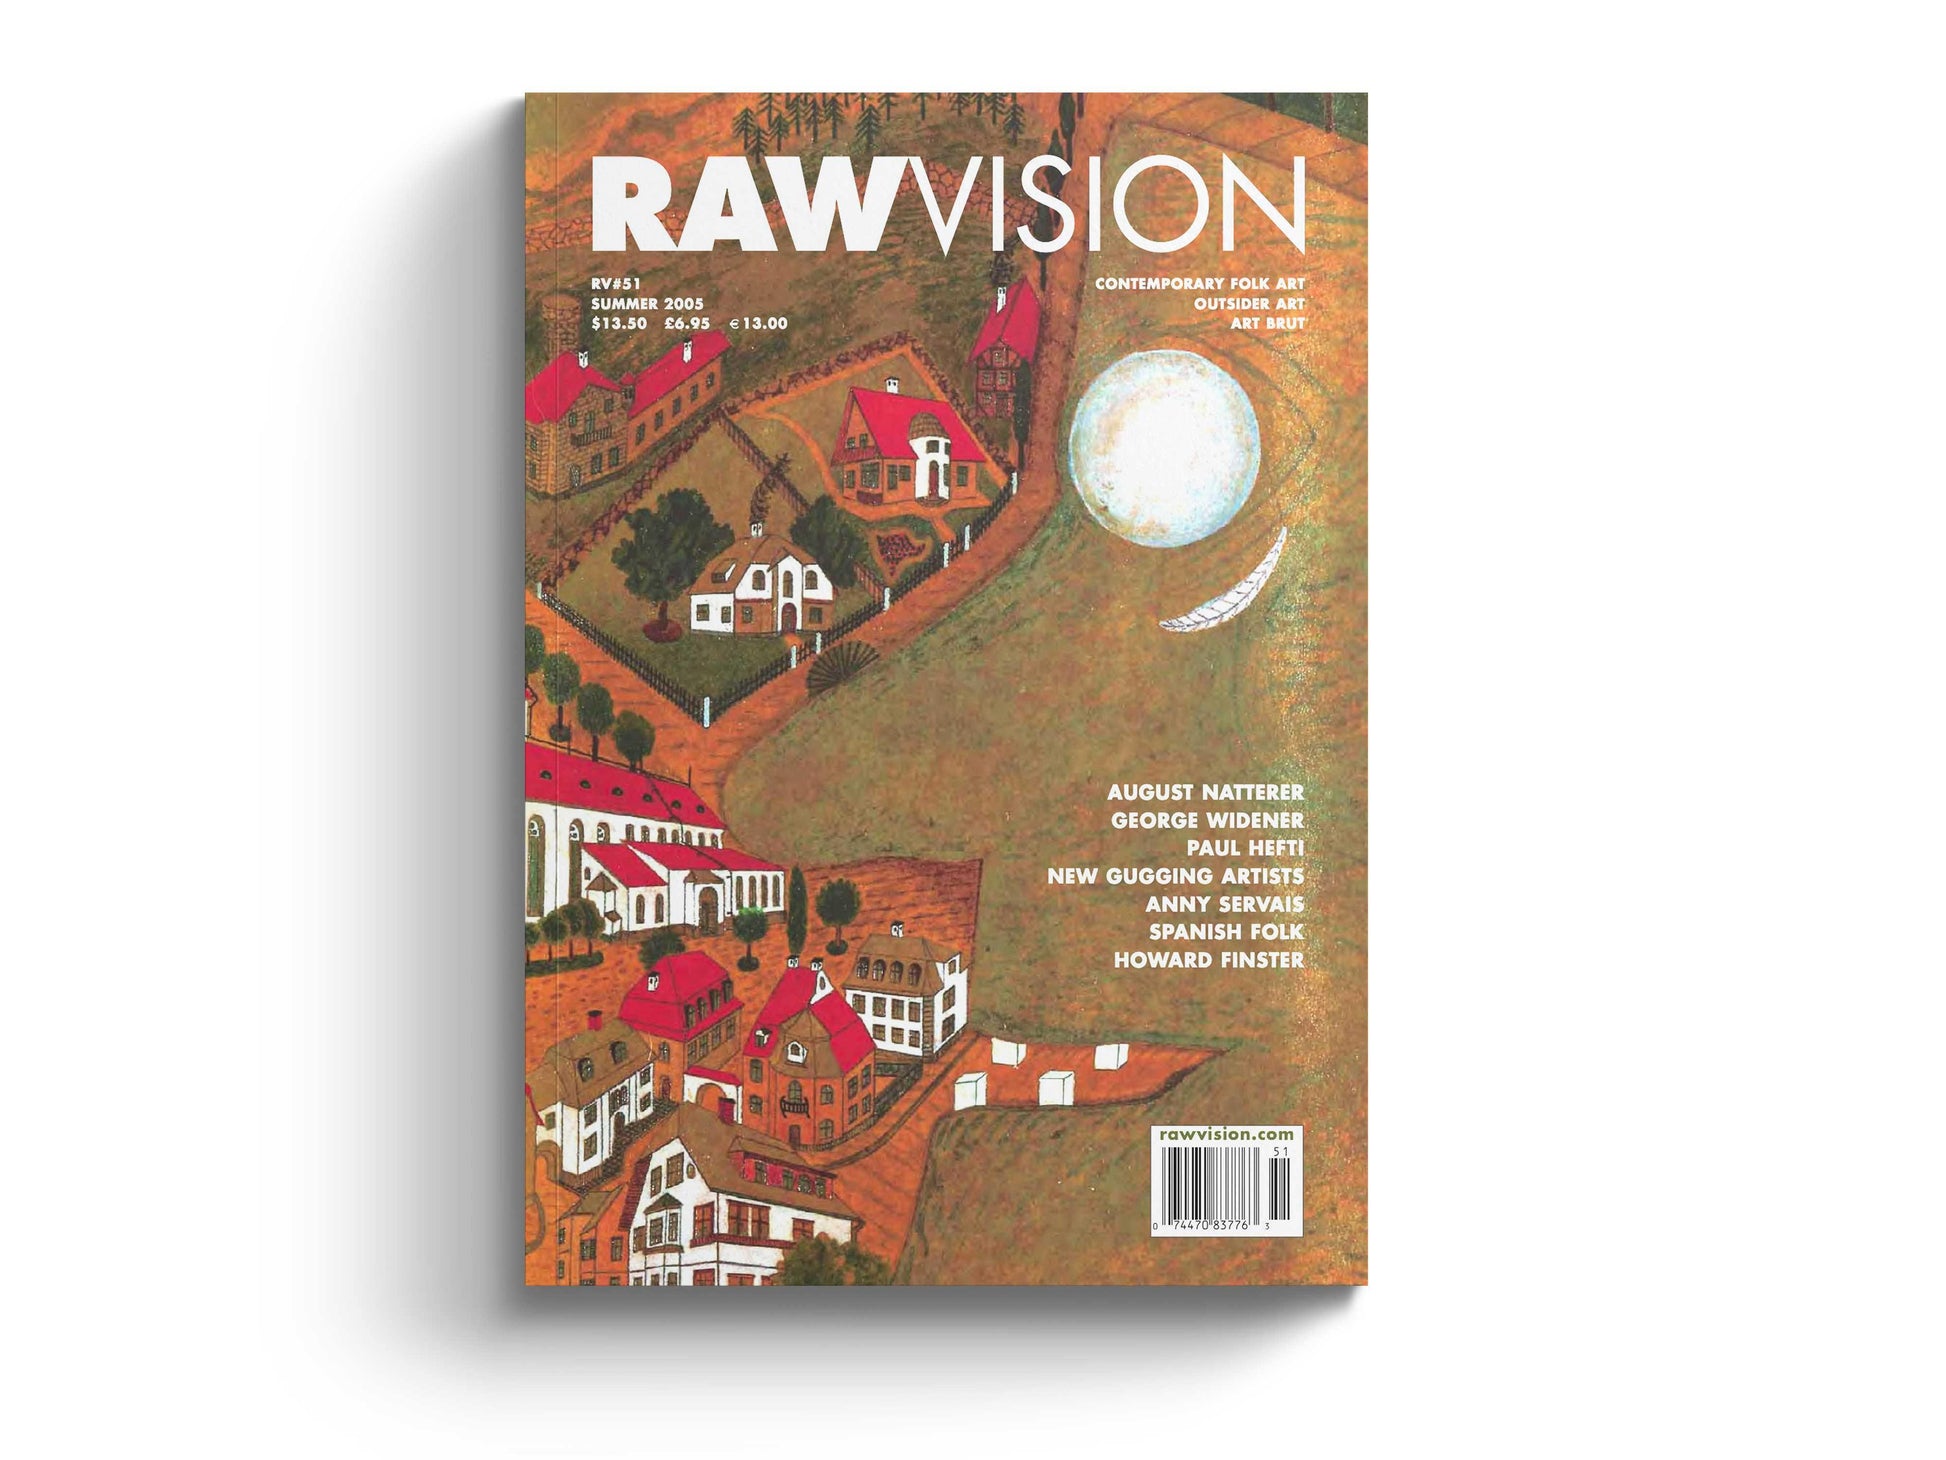 Raw Vision Magazine Issue #51